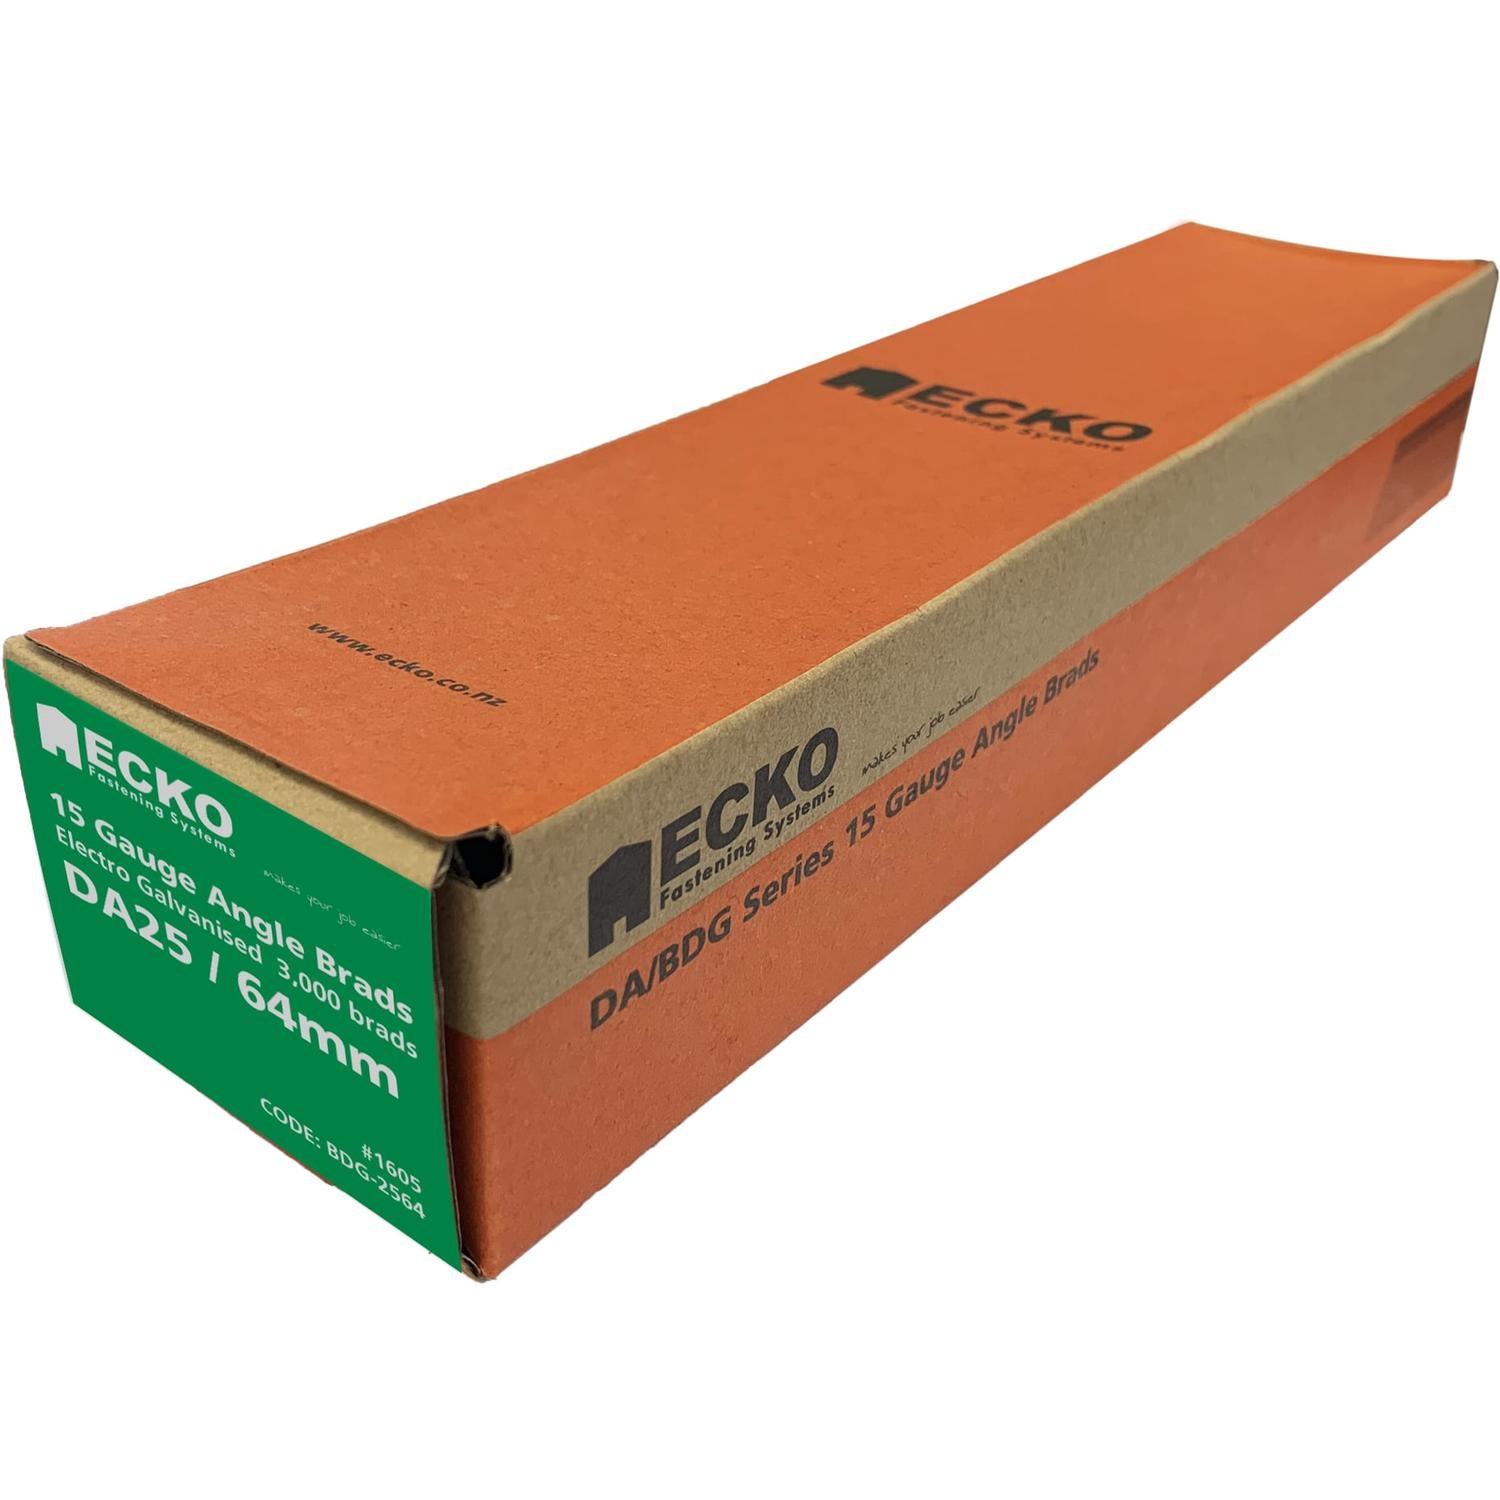 Ecko Da/Bdg Series 15 Gauge Angle Brads Gasless Pack Da21 X 64Mm Electro Galvanised (3000 Box)